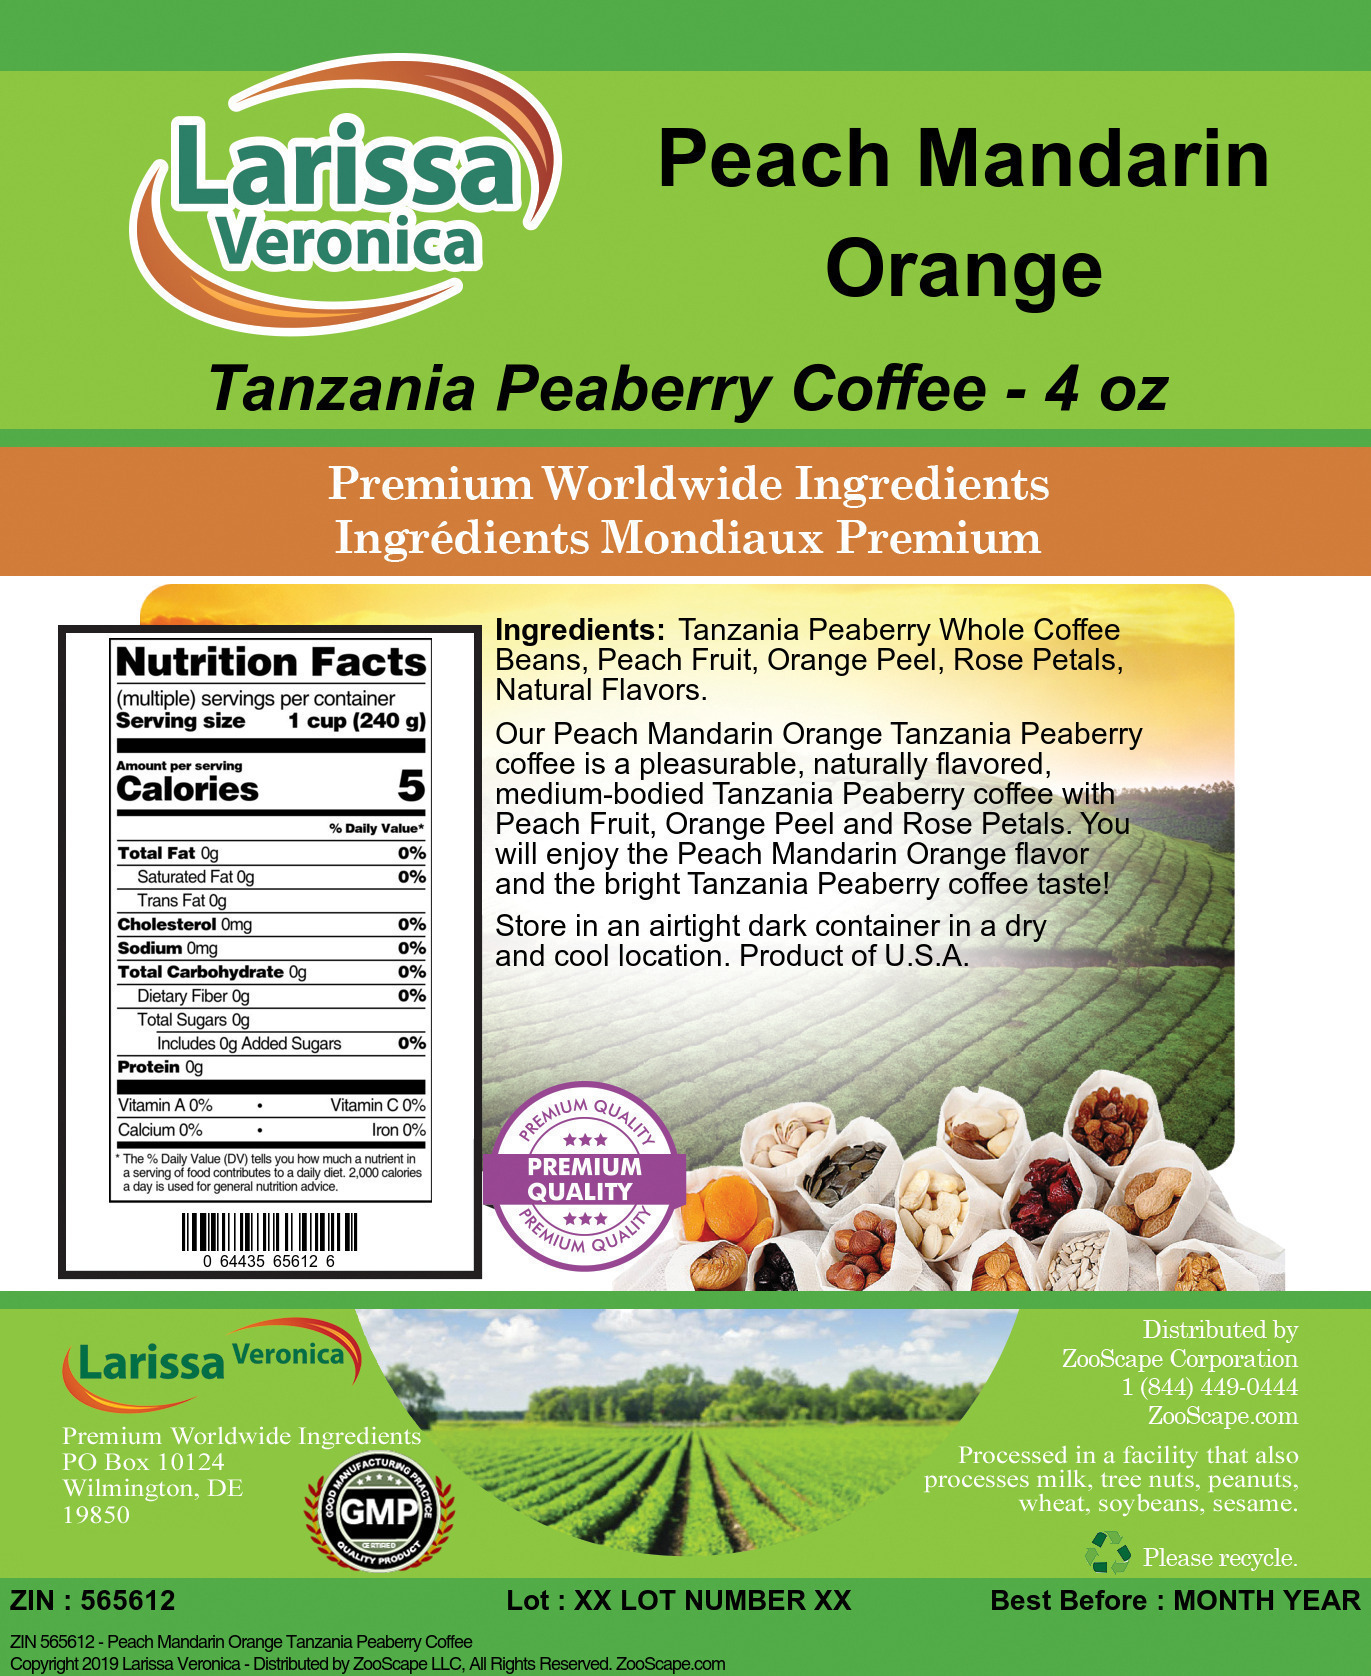 Peach Mandarin Orange Tanzania Peaberry Coffee - Label